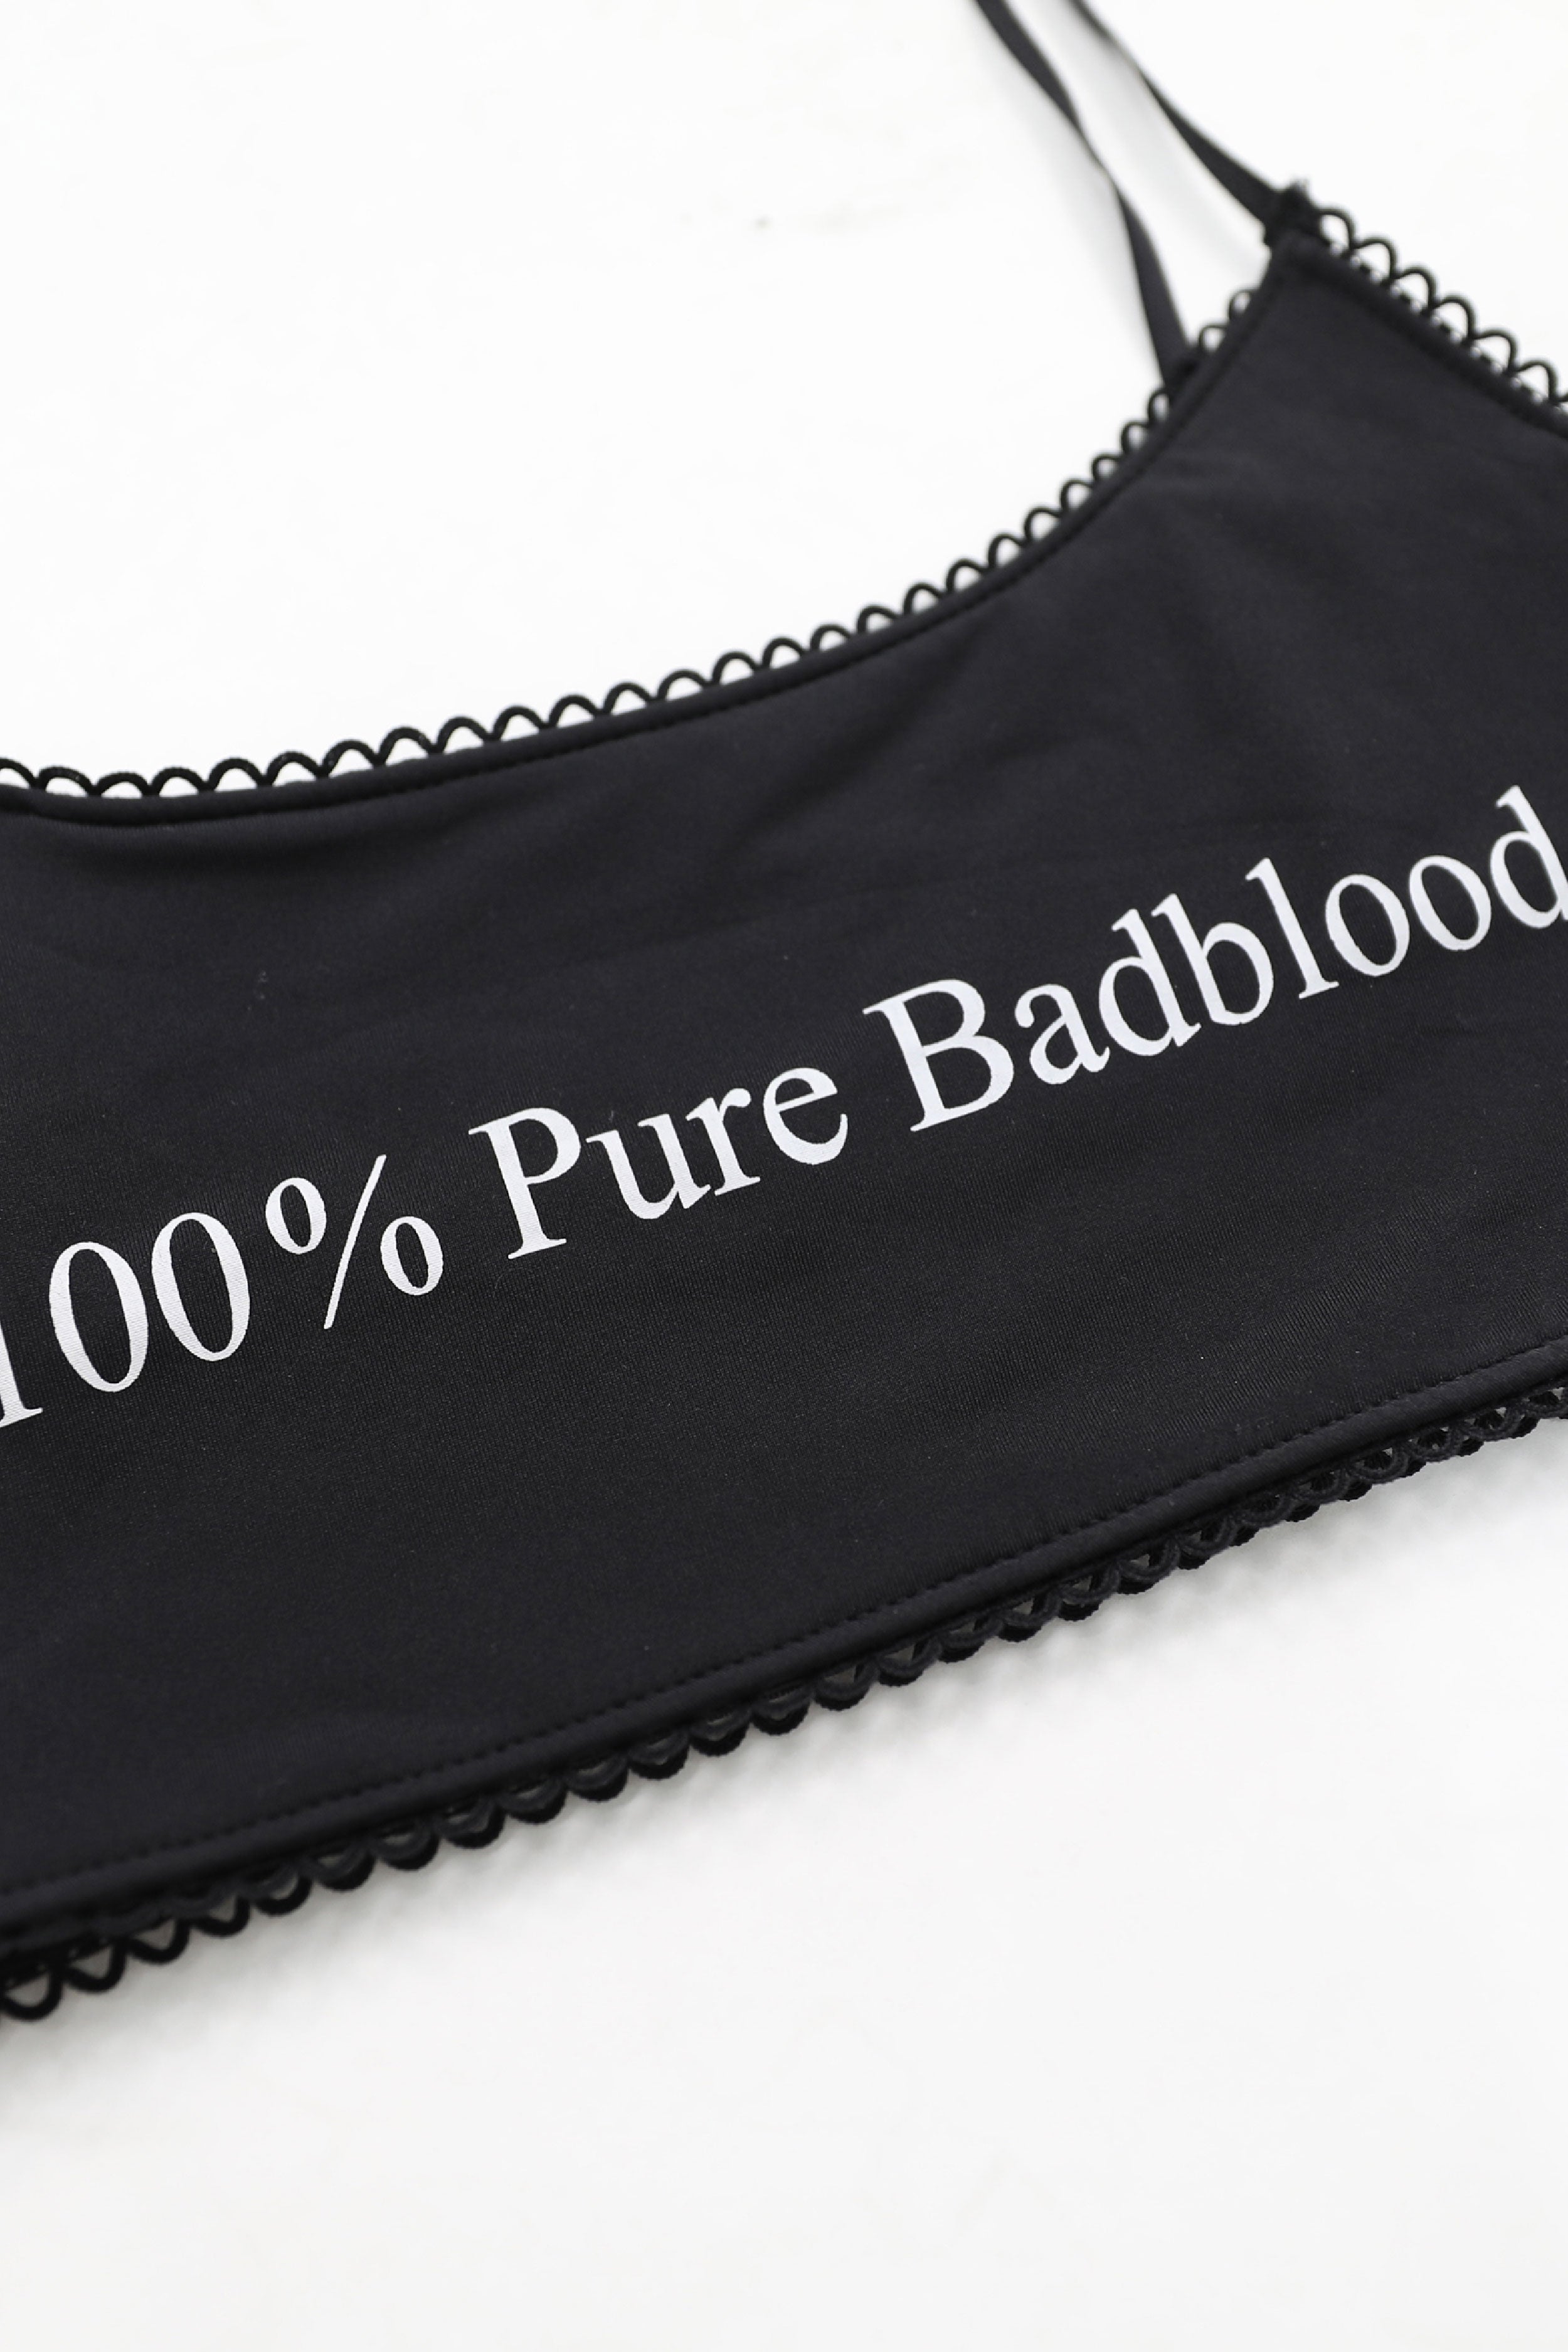 Badblood Pure Scoop Bikini Top Black